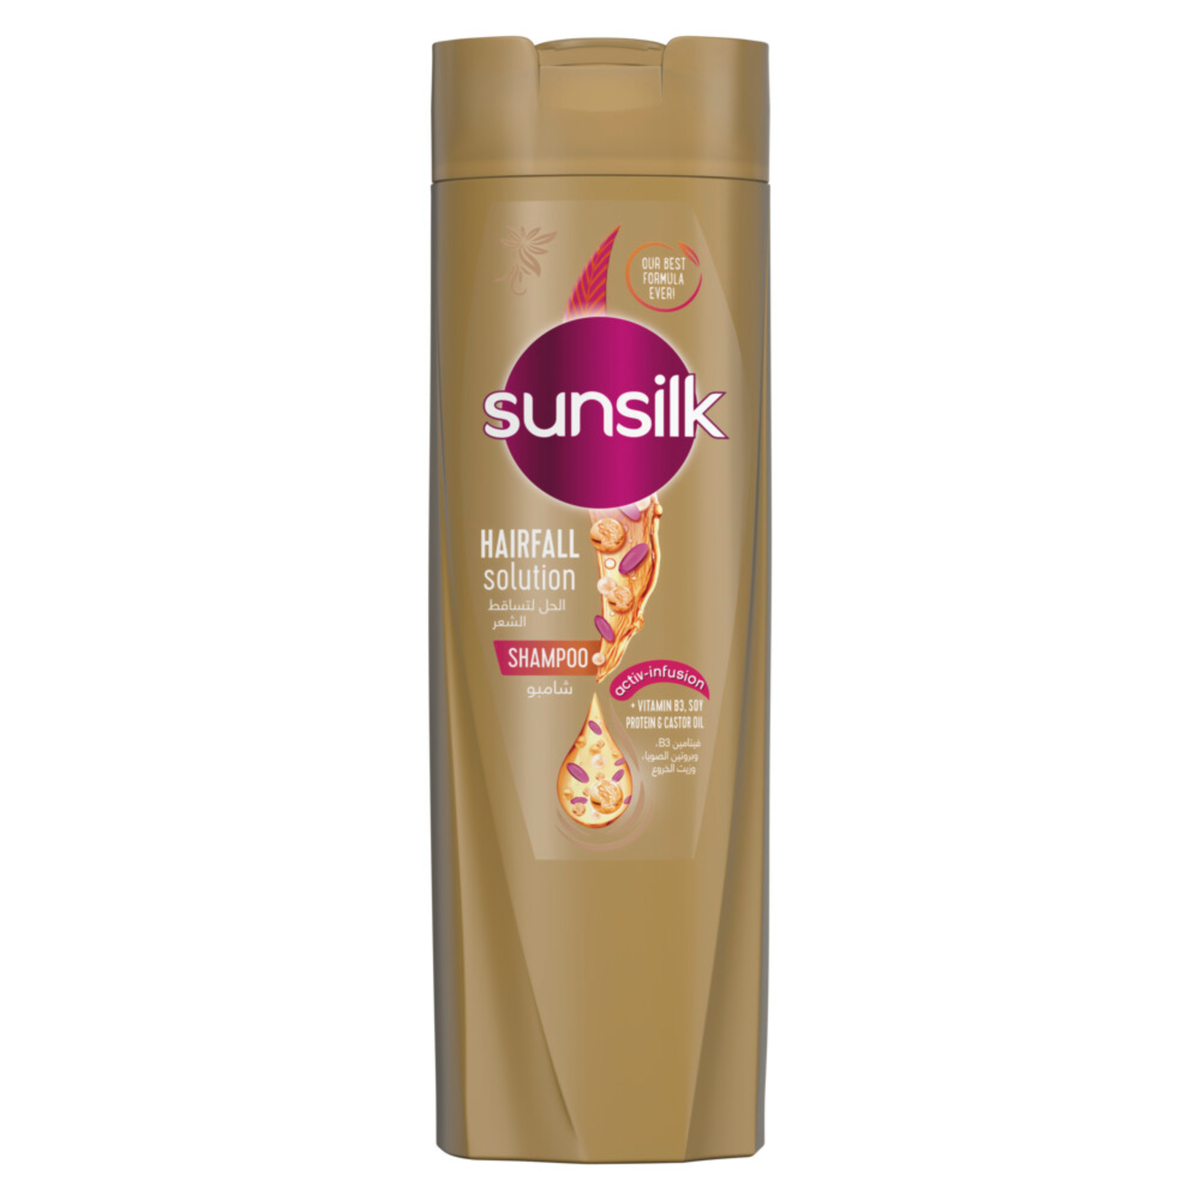 Sunsilk Hair Fall Solution Shampoo 200 ml